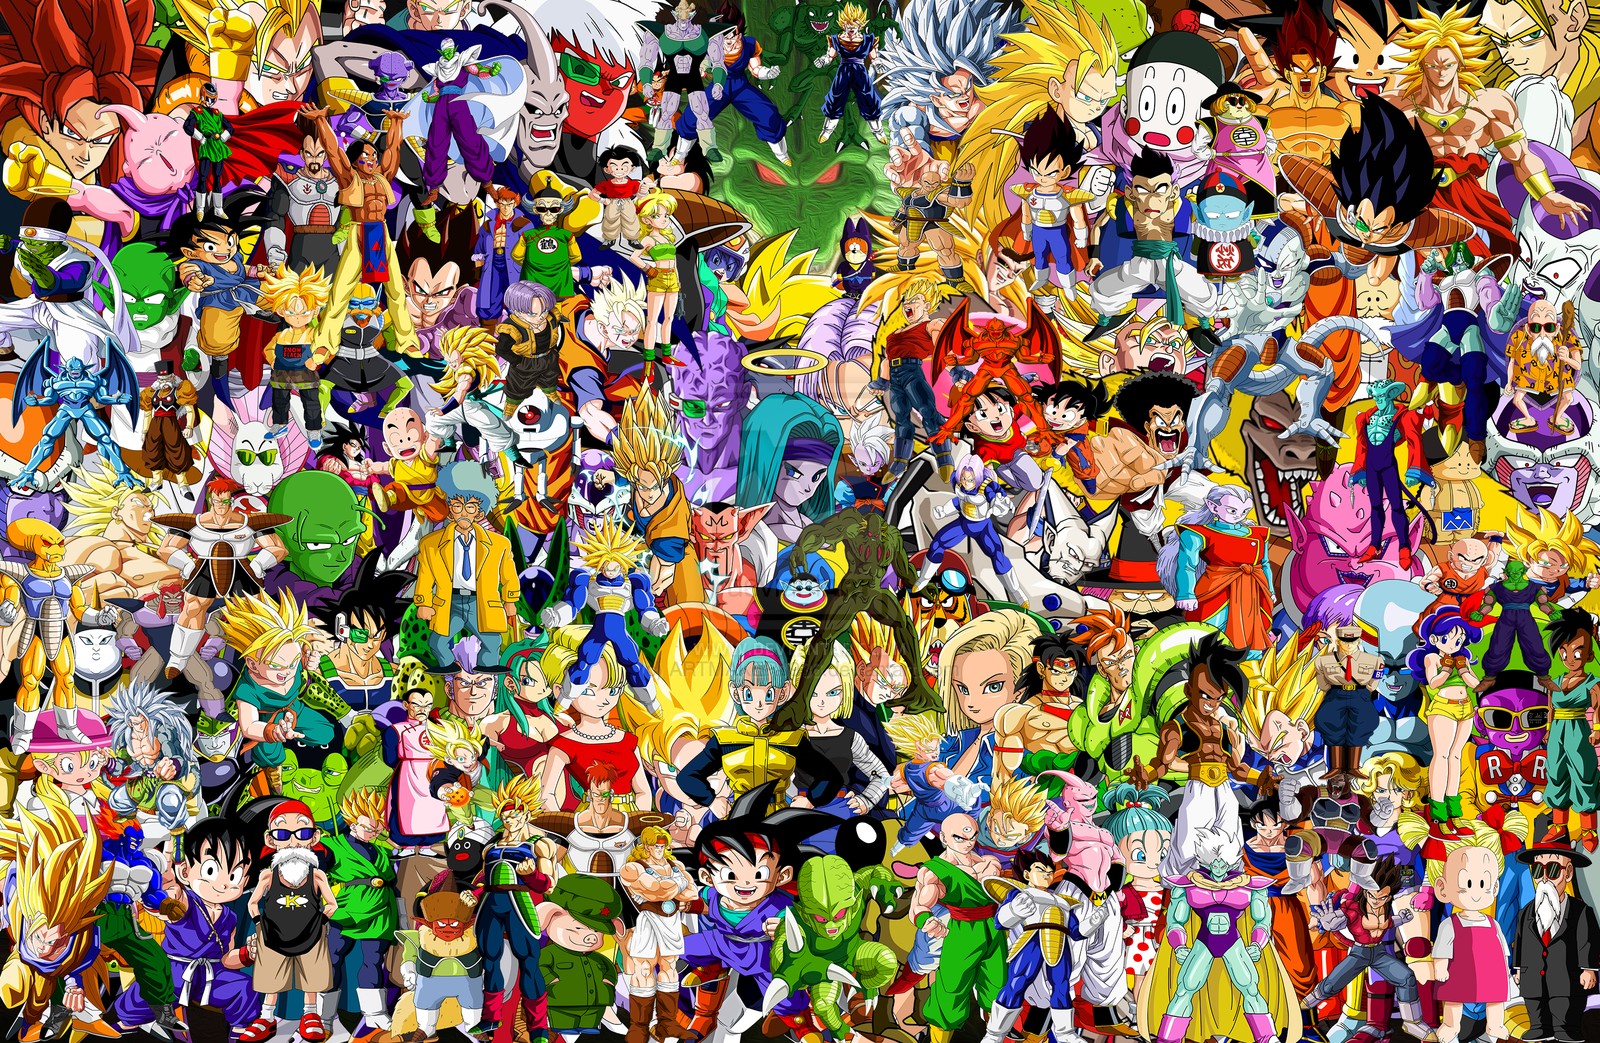 Dragon Ball Wallpaper